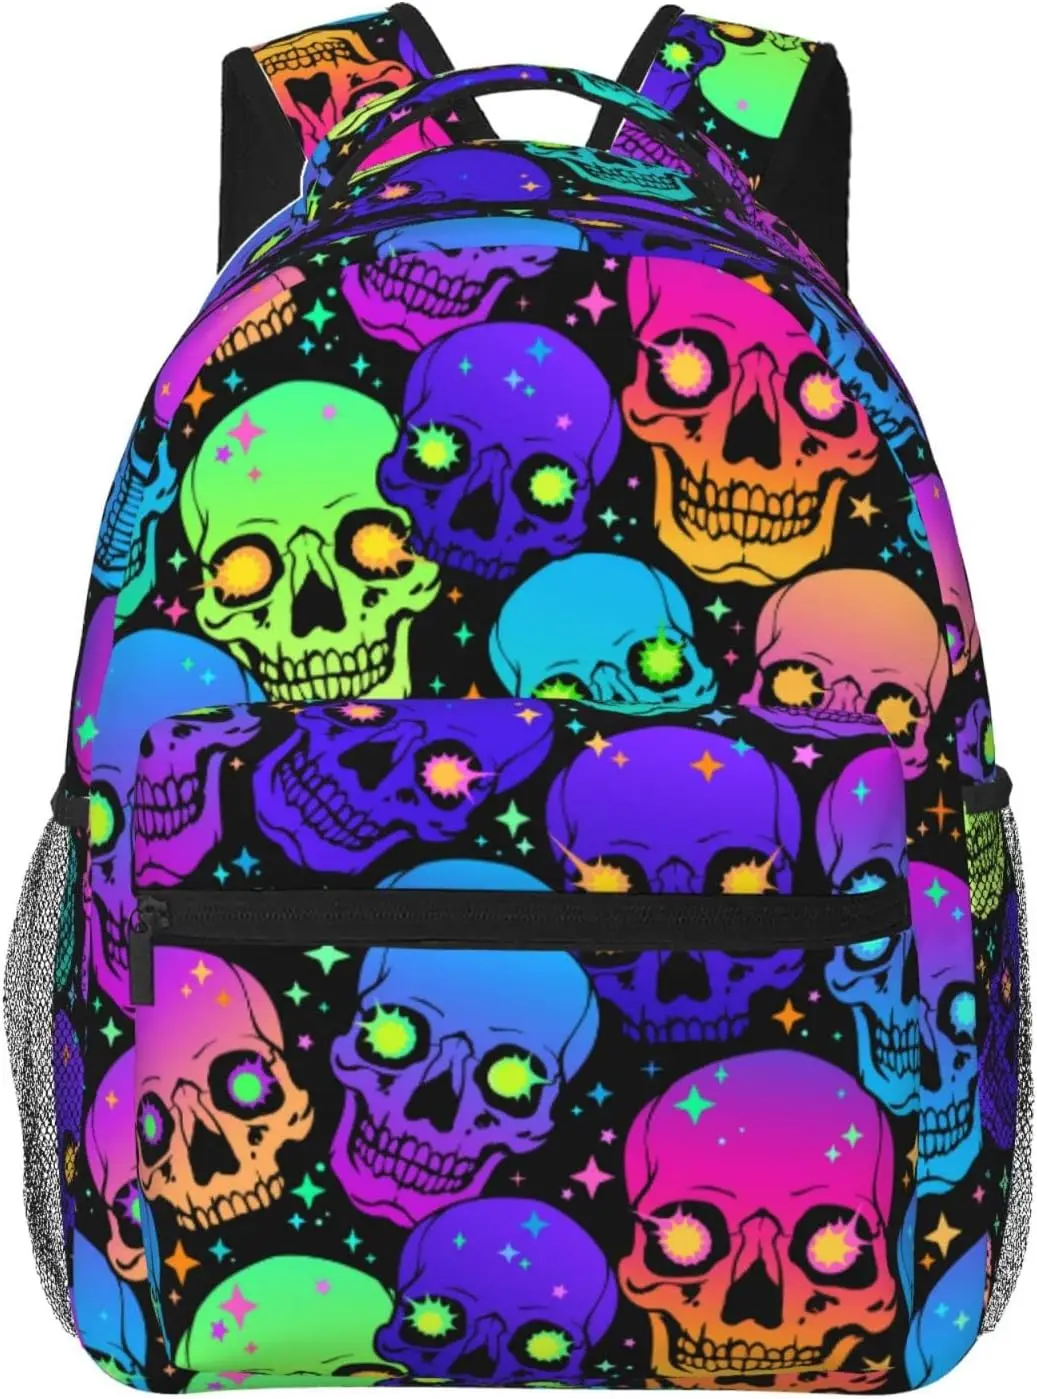 

Neon Bright Human Skulls Lightweight Laptop Backpack for Women Men College Bookbag Casual Daypack Travel Bag